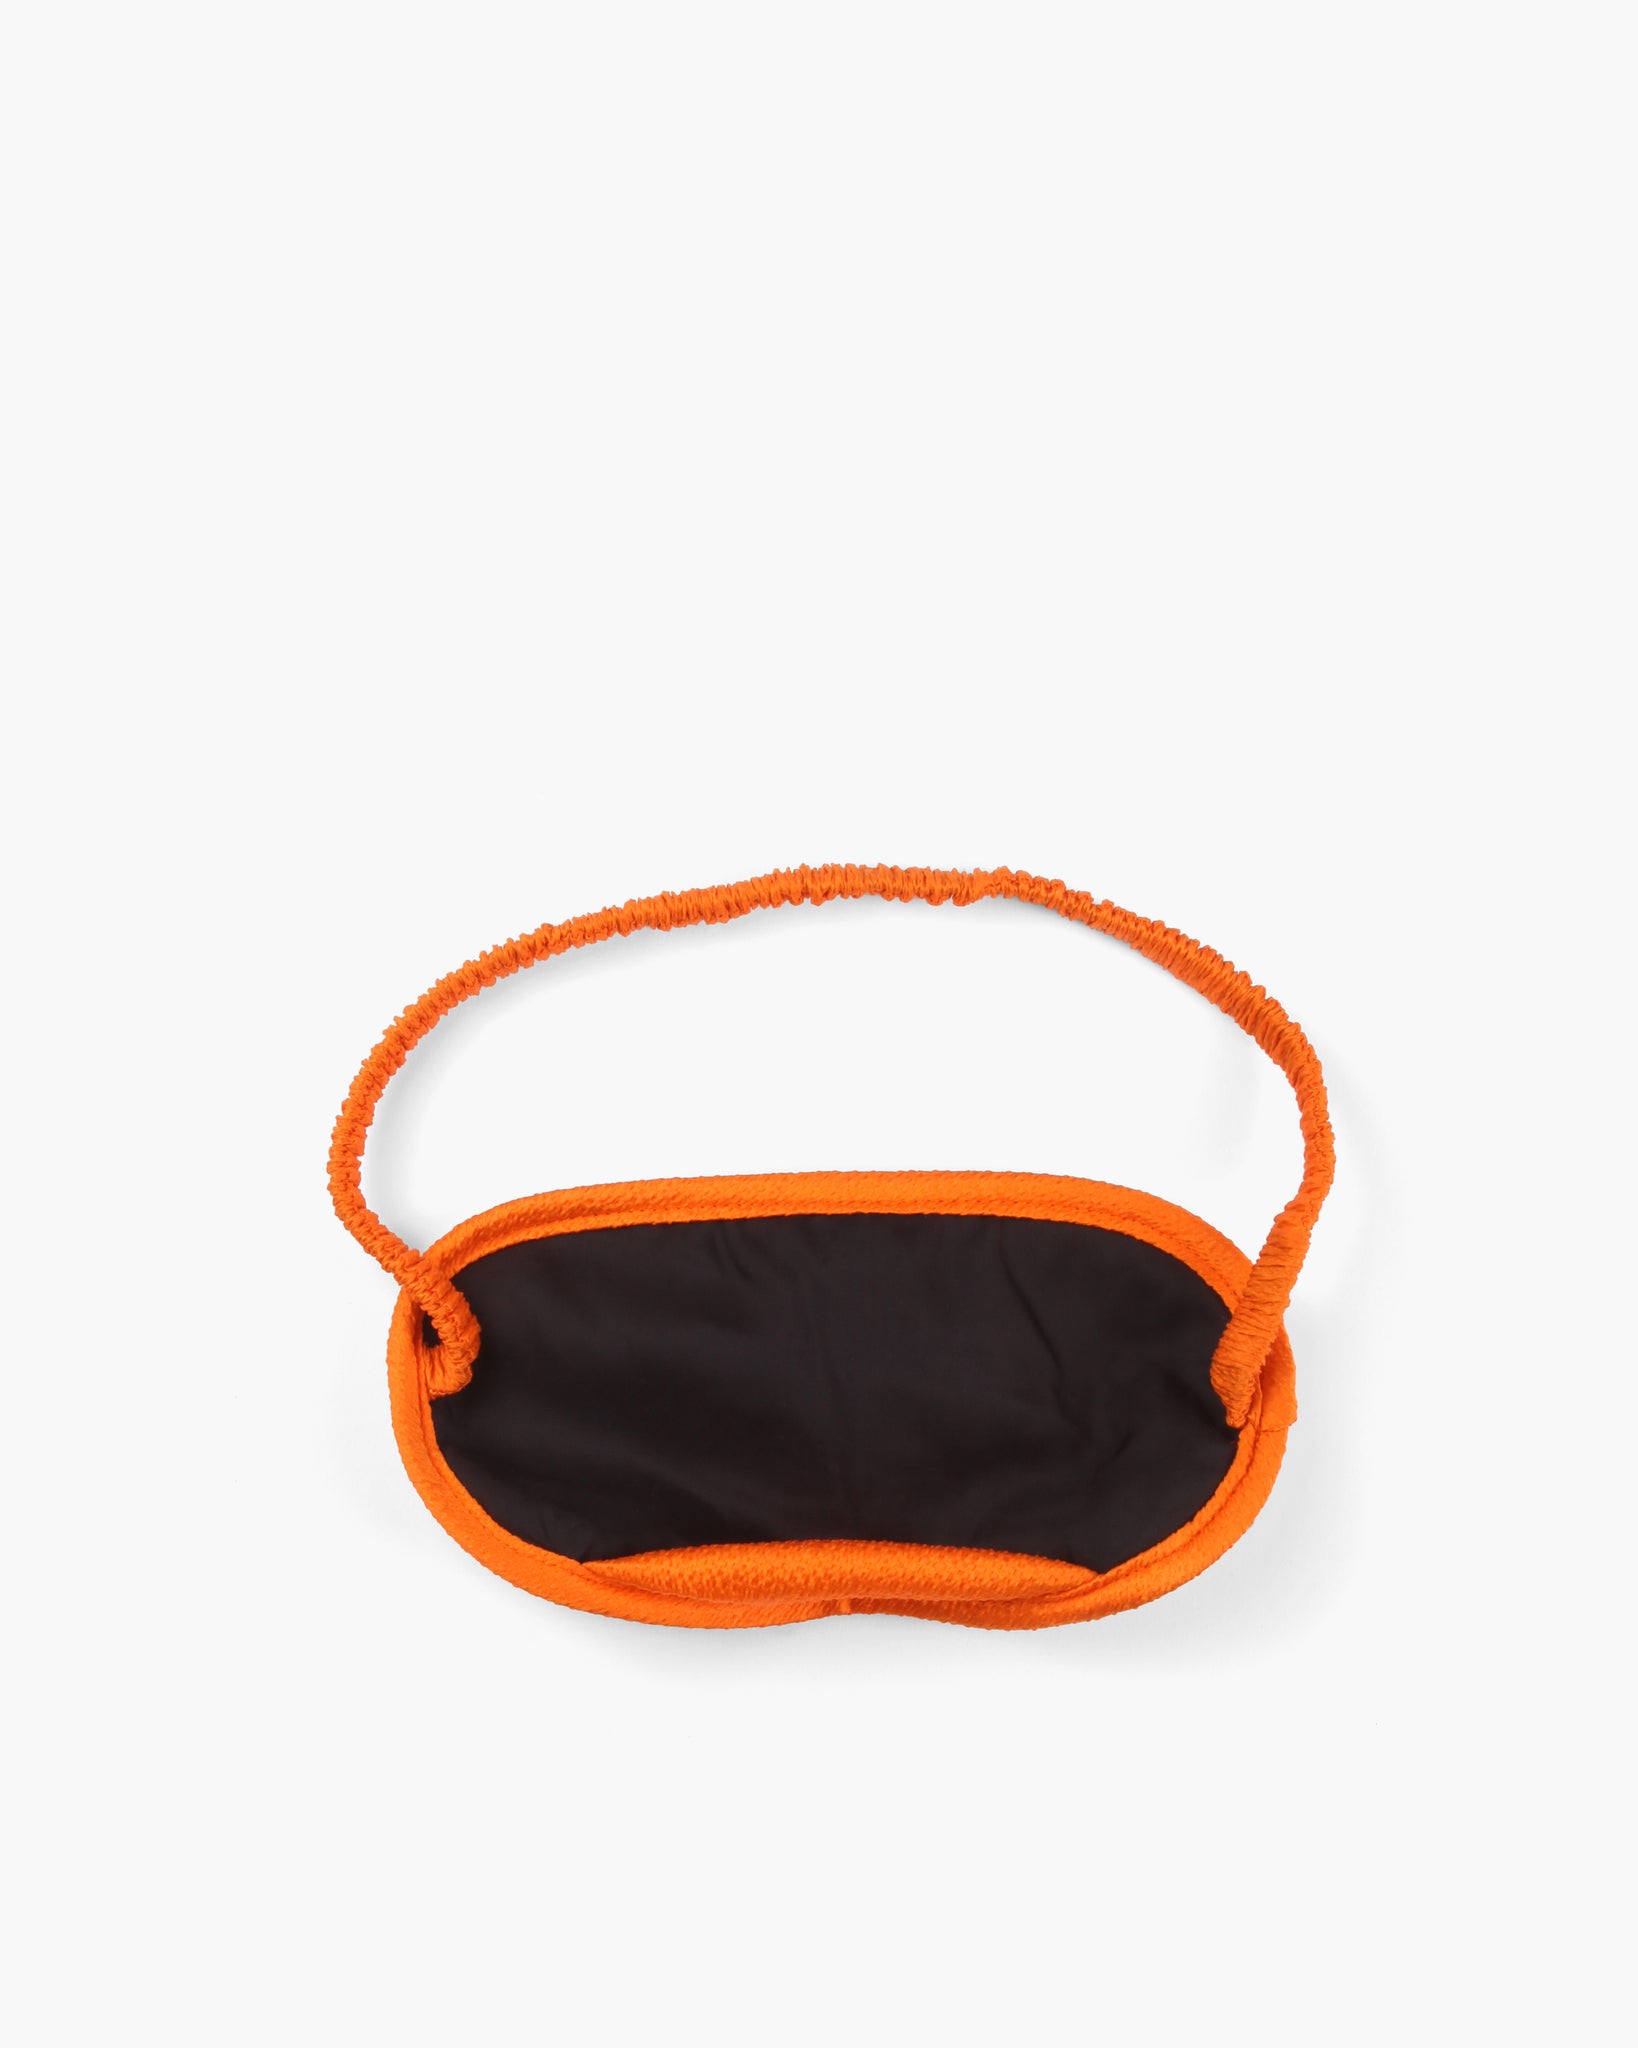 Eye Mask Hammered Silk Orange - Special Price